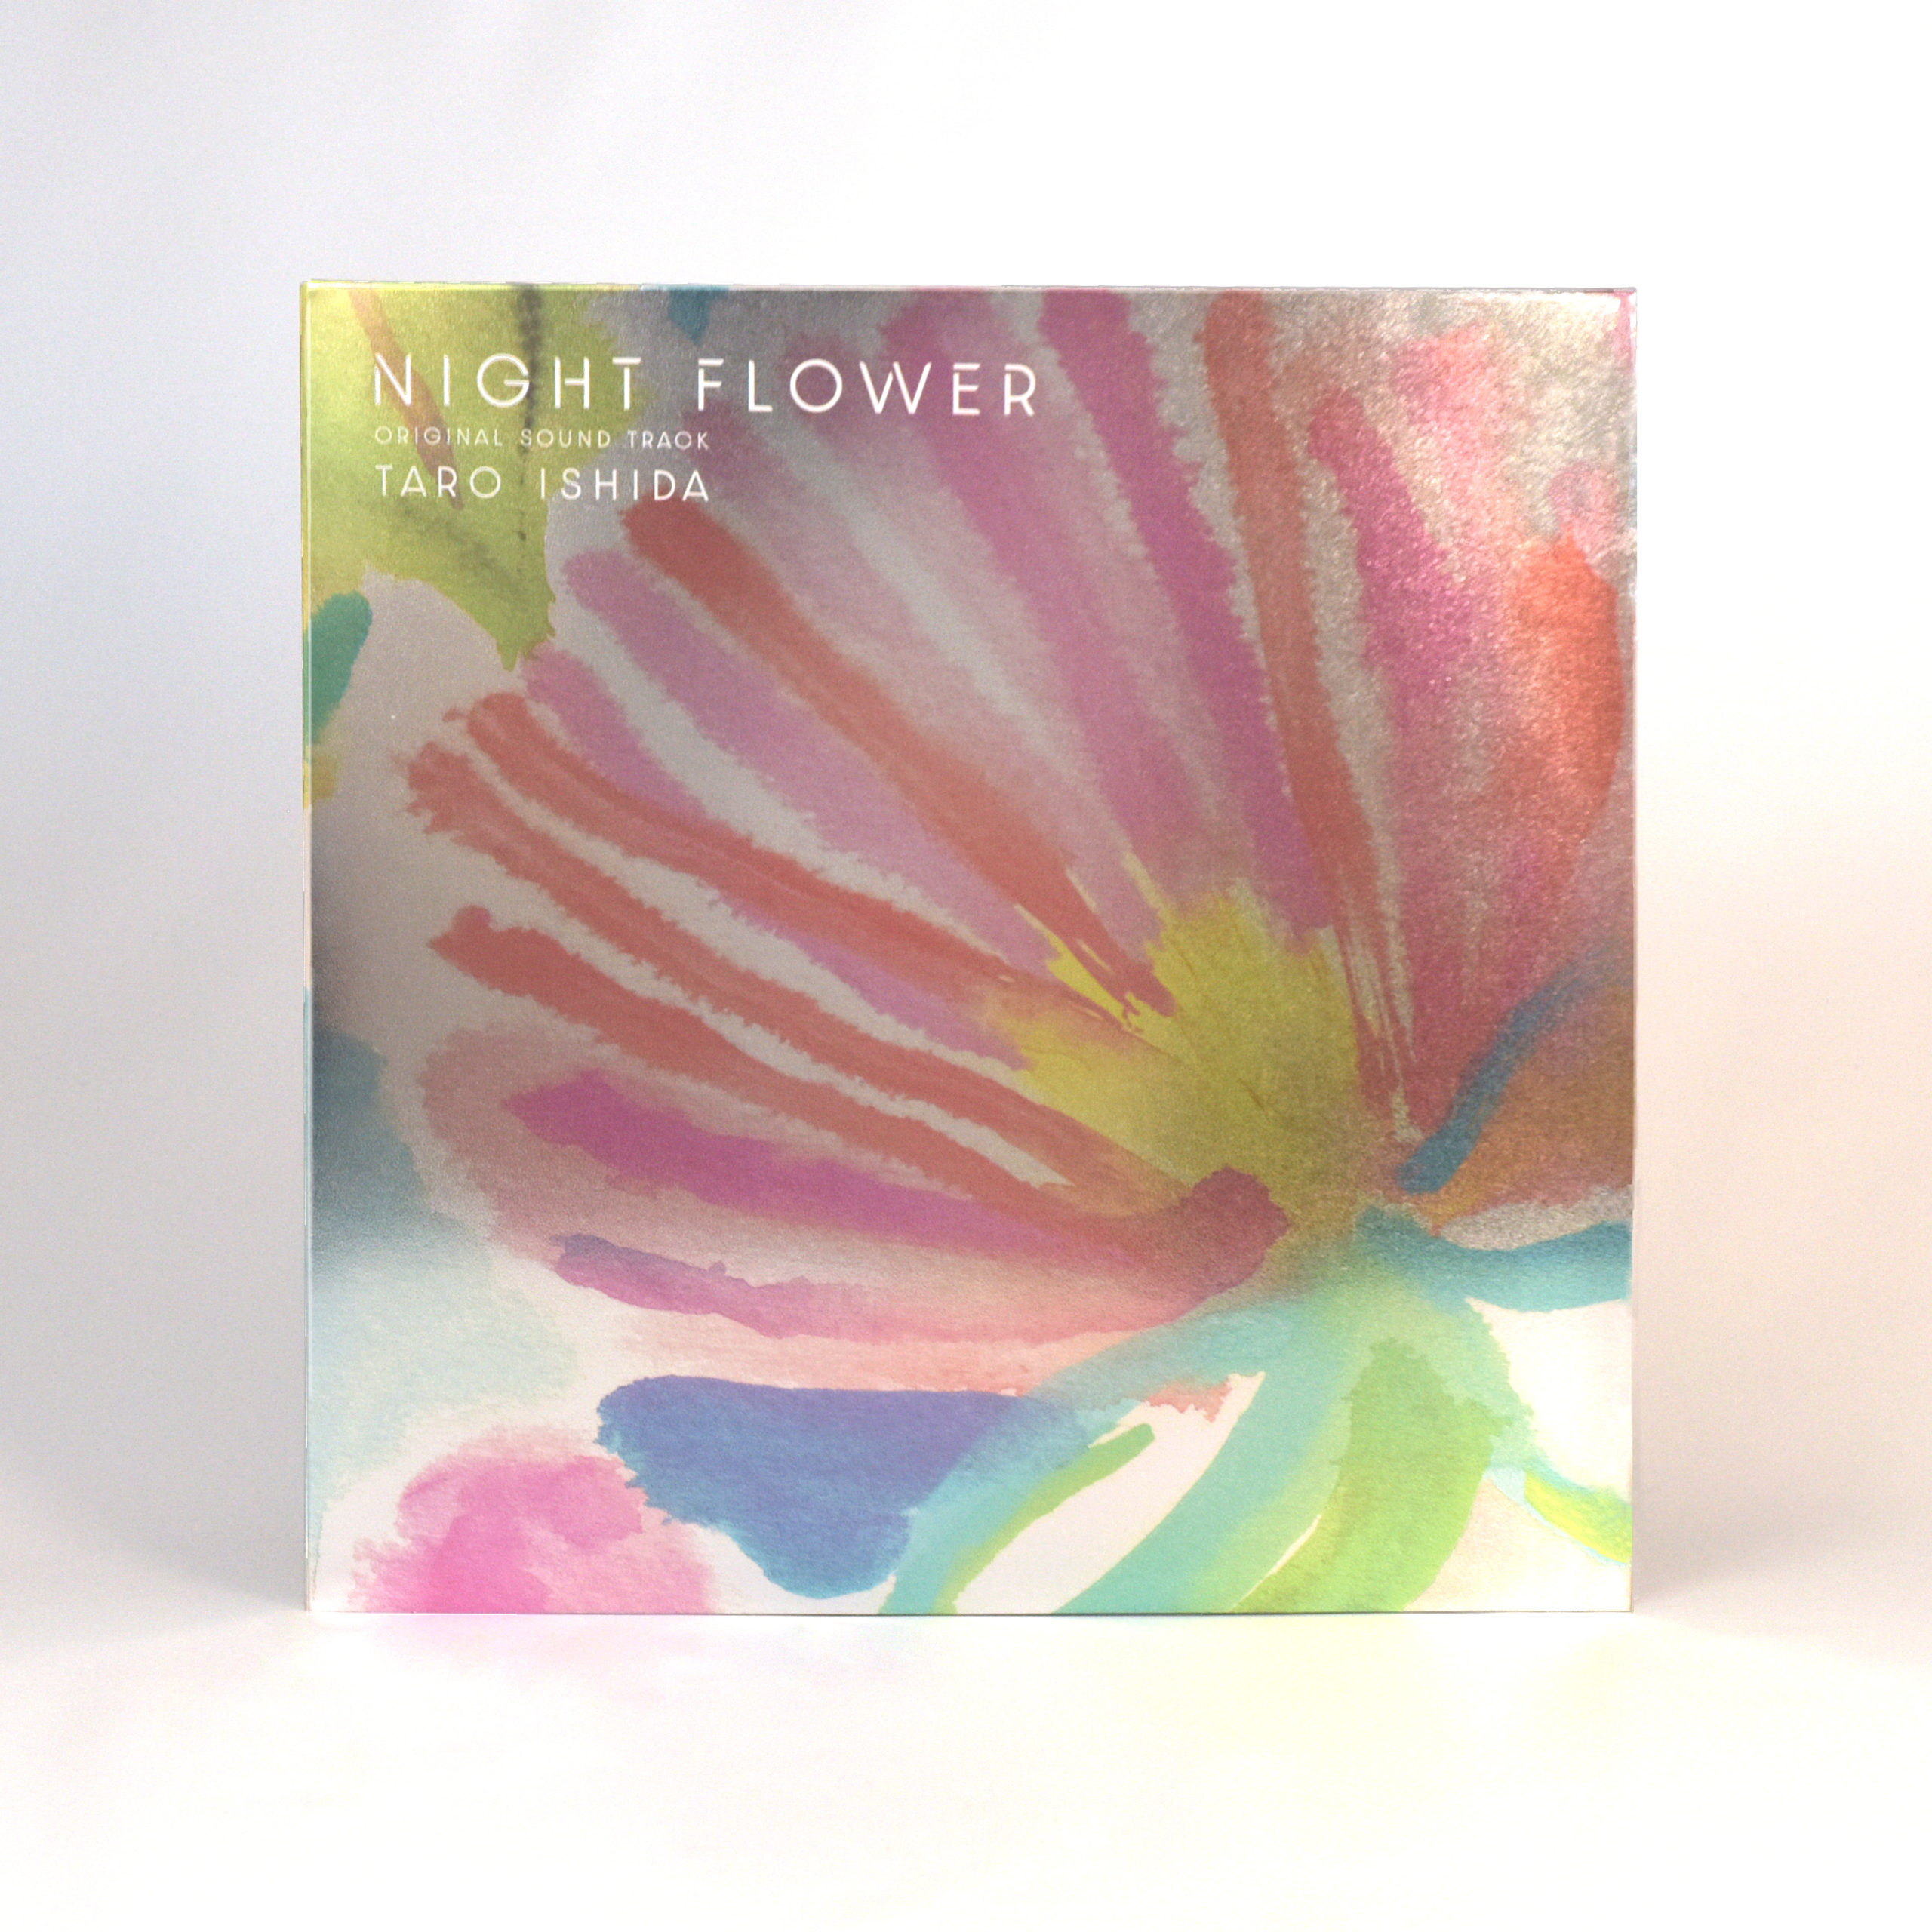 「Night Flower ～星ふる島の一夜花～」オリジナル・サウンドトラック